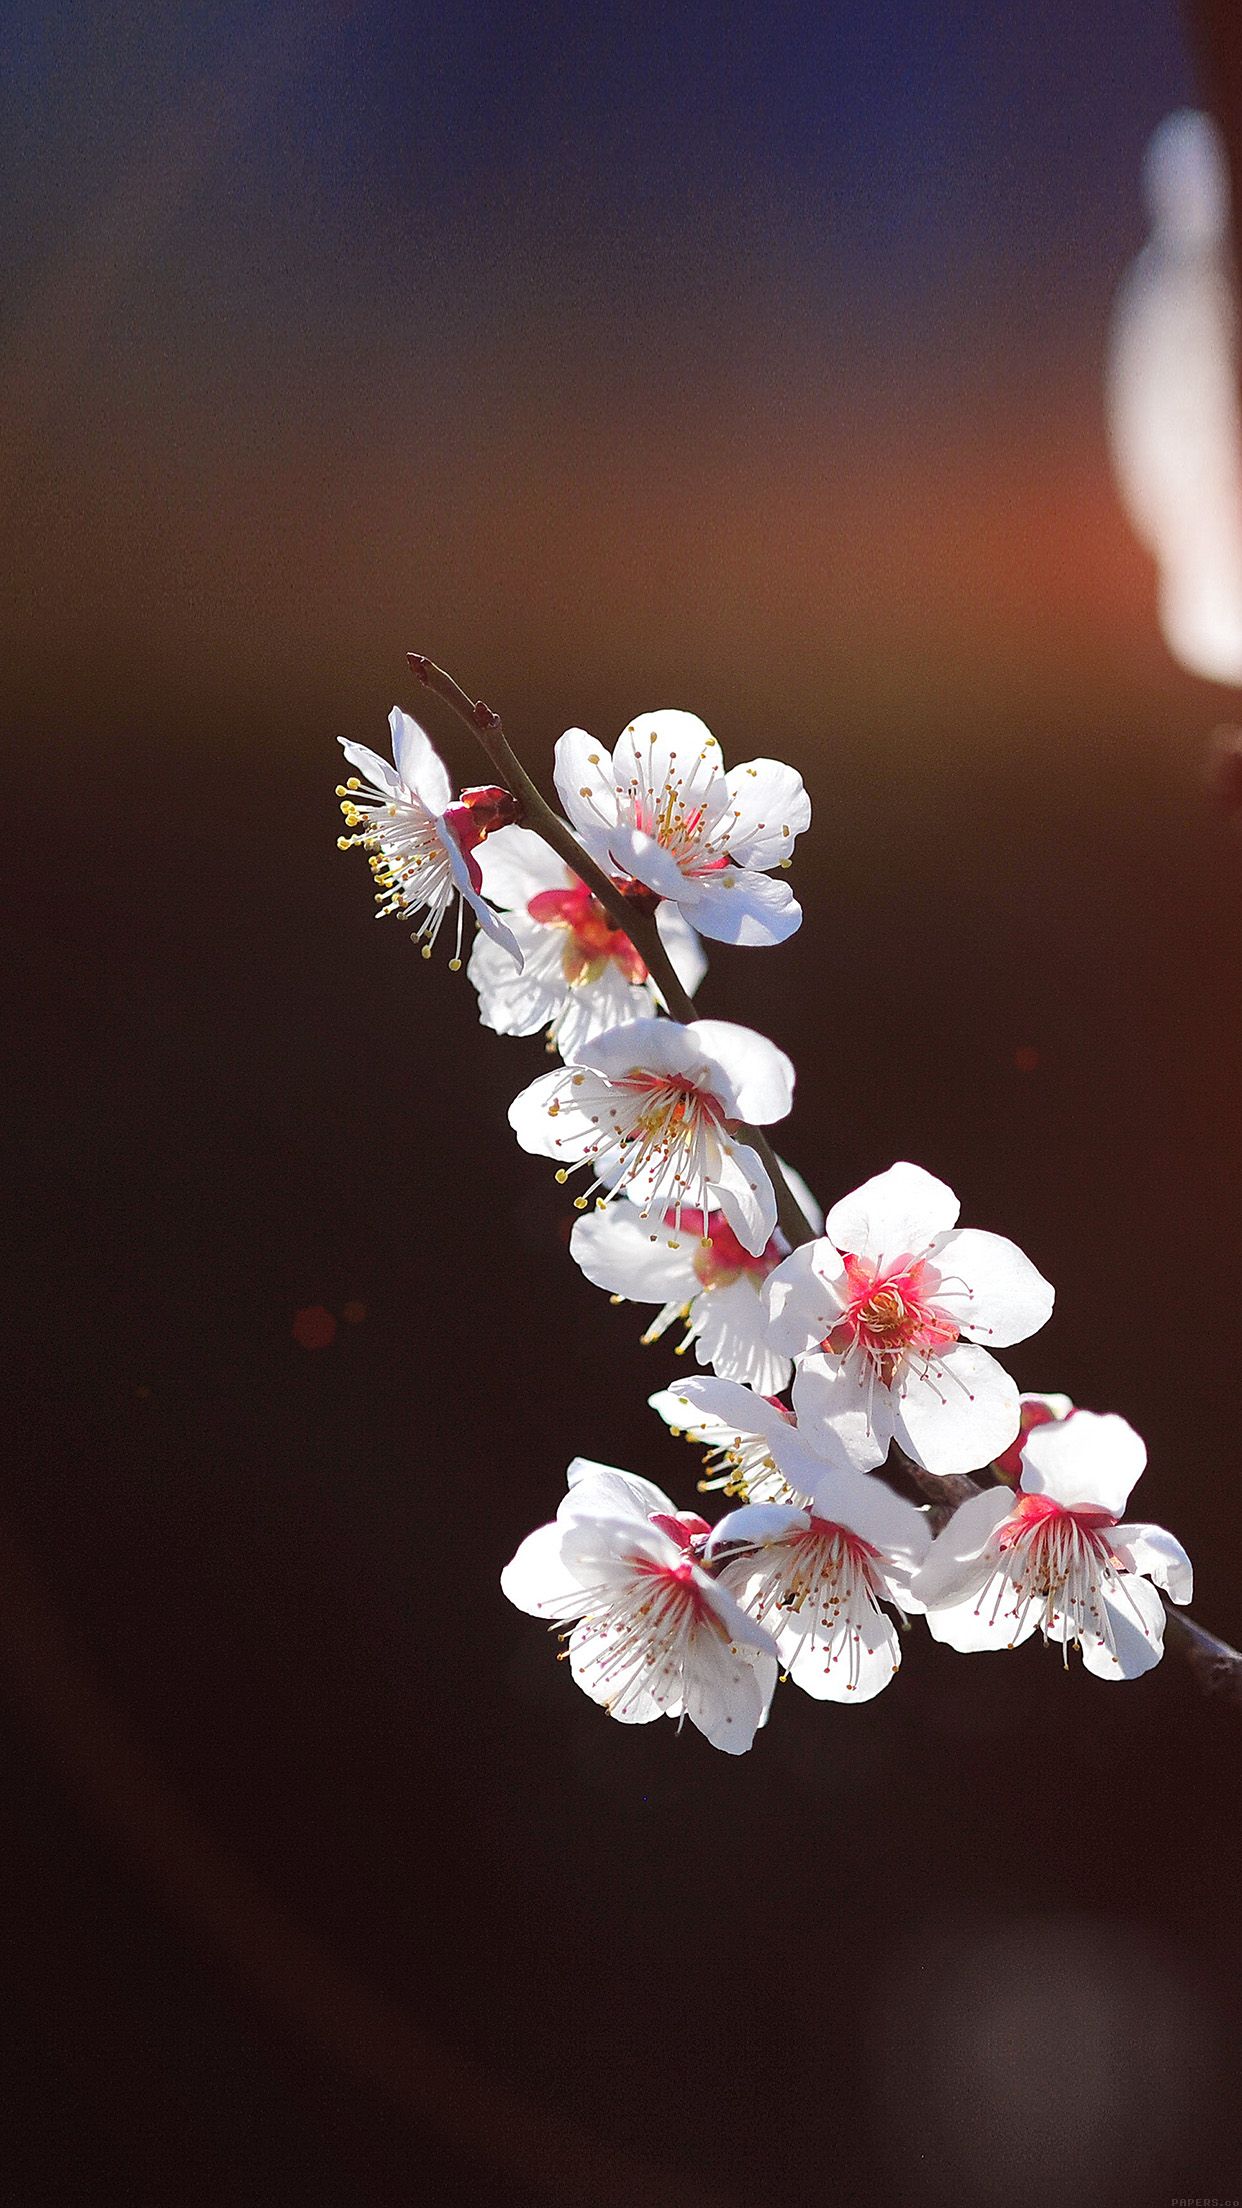 iPhone7 wallpaper. spring flower sakura nature tree flare